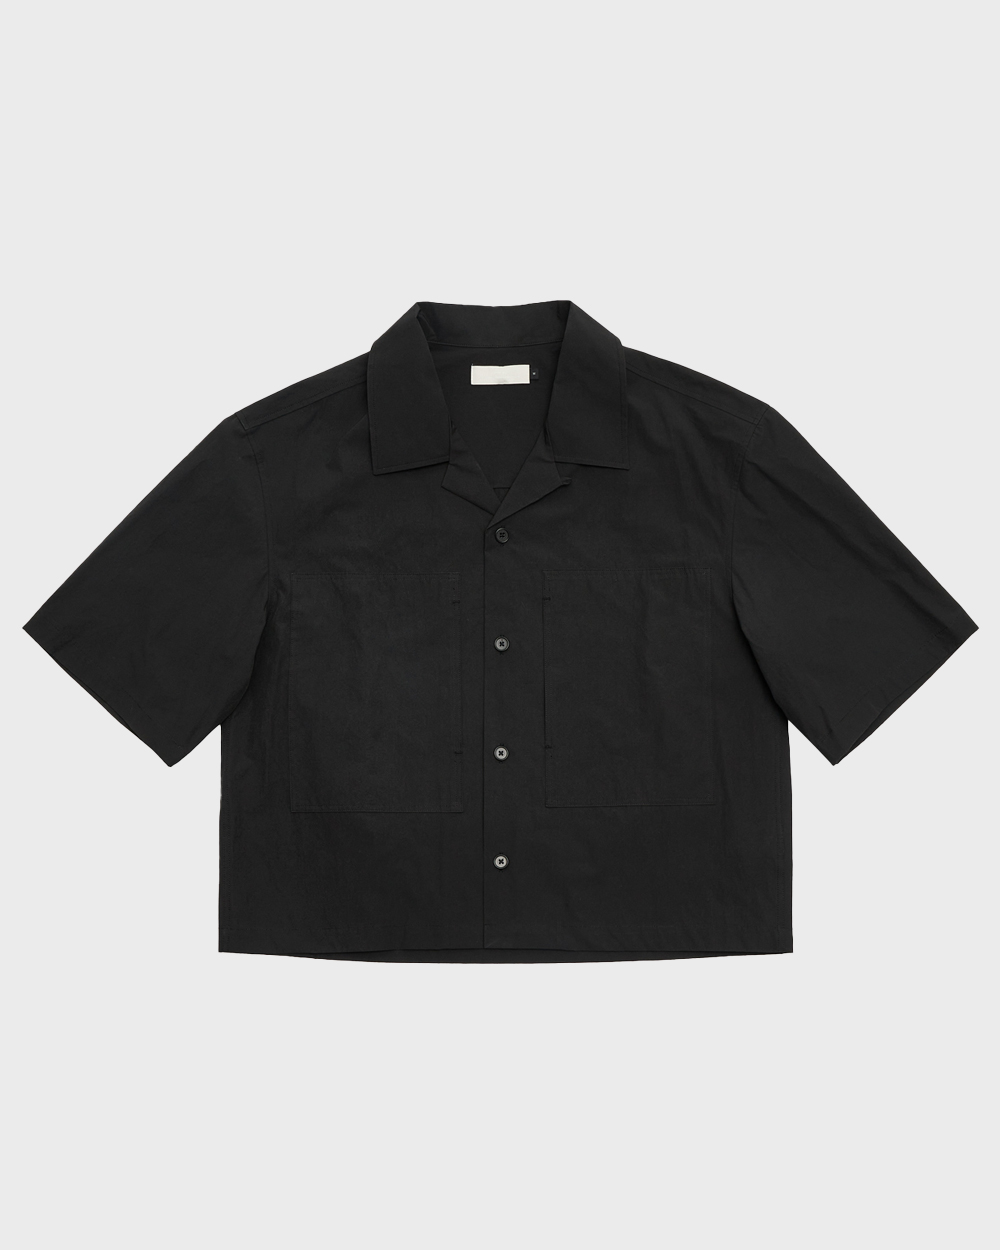 Pocket Half Shirts (Black)